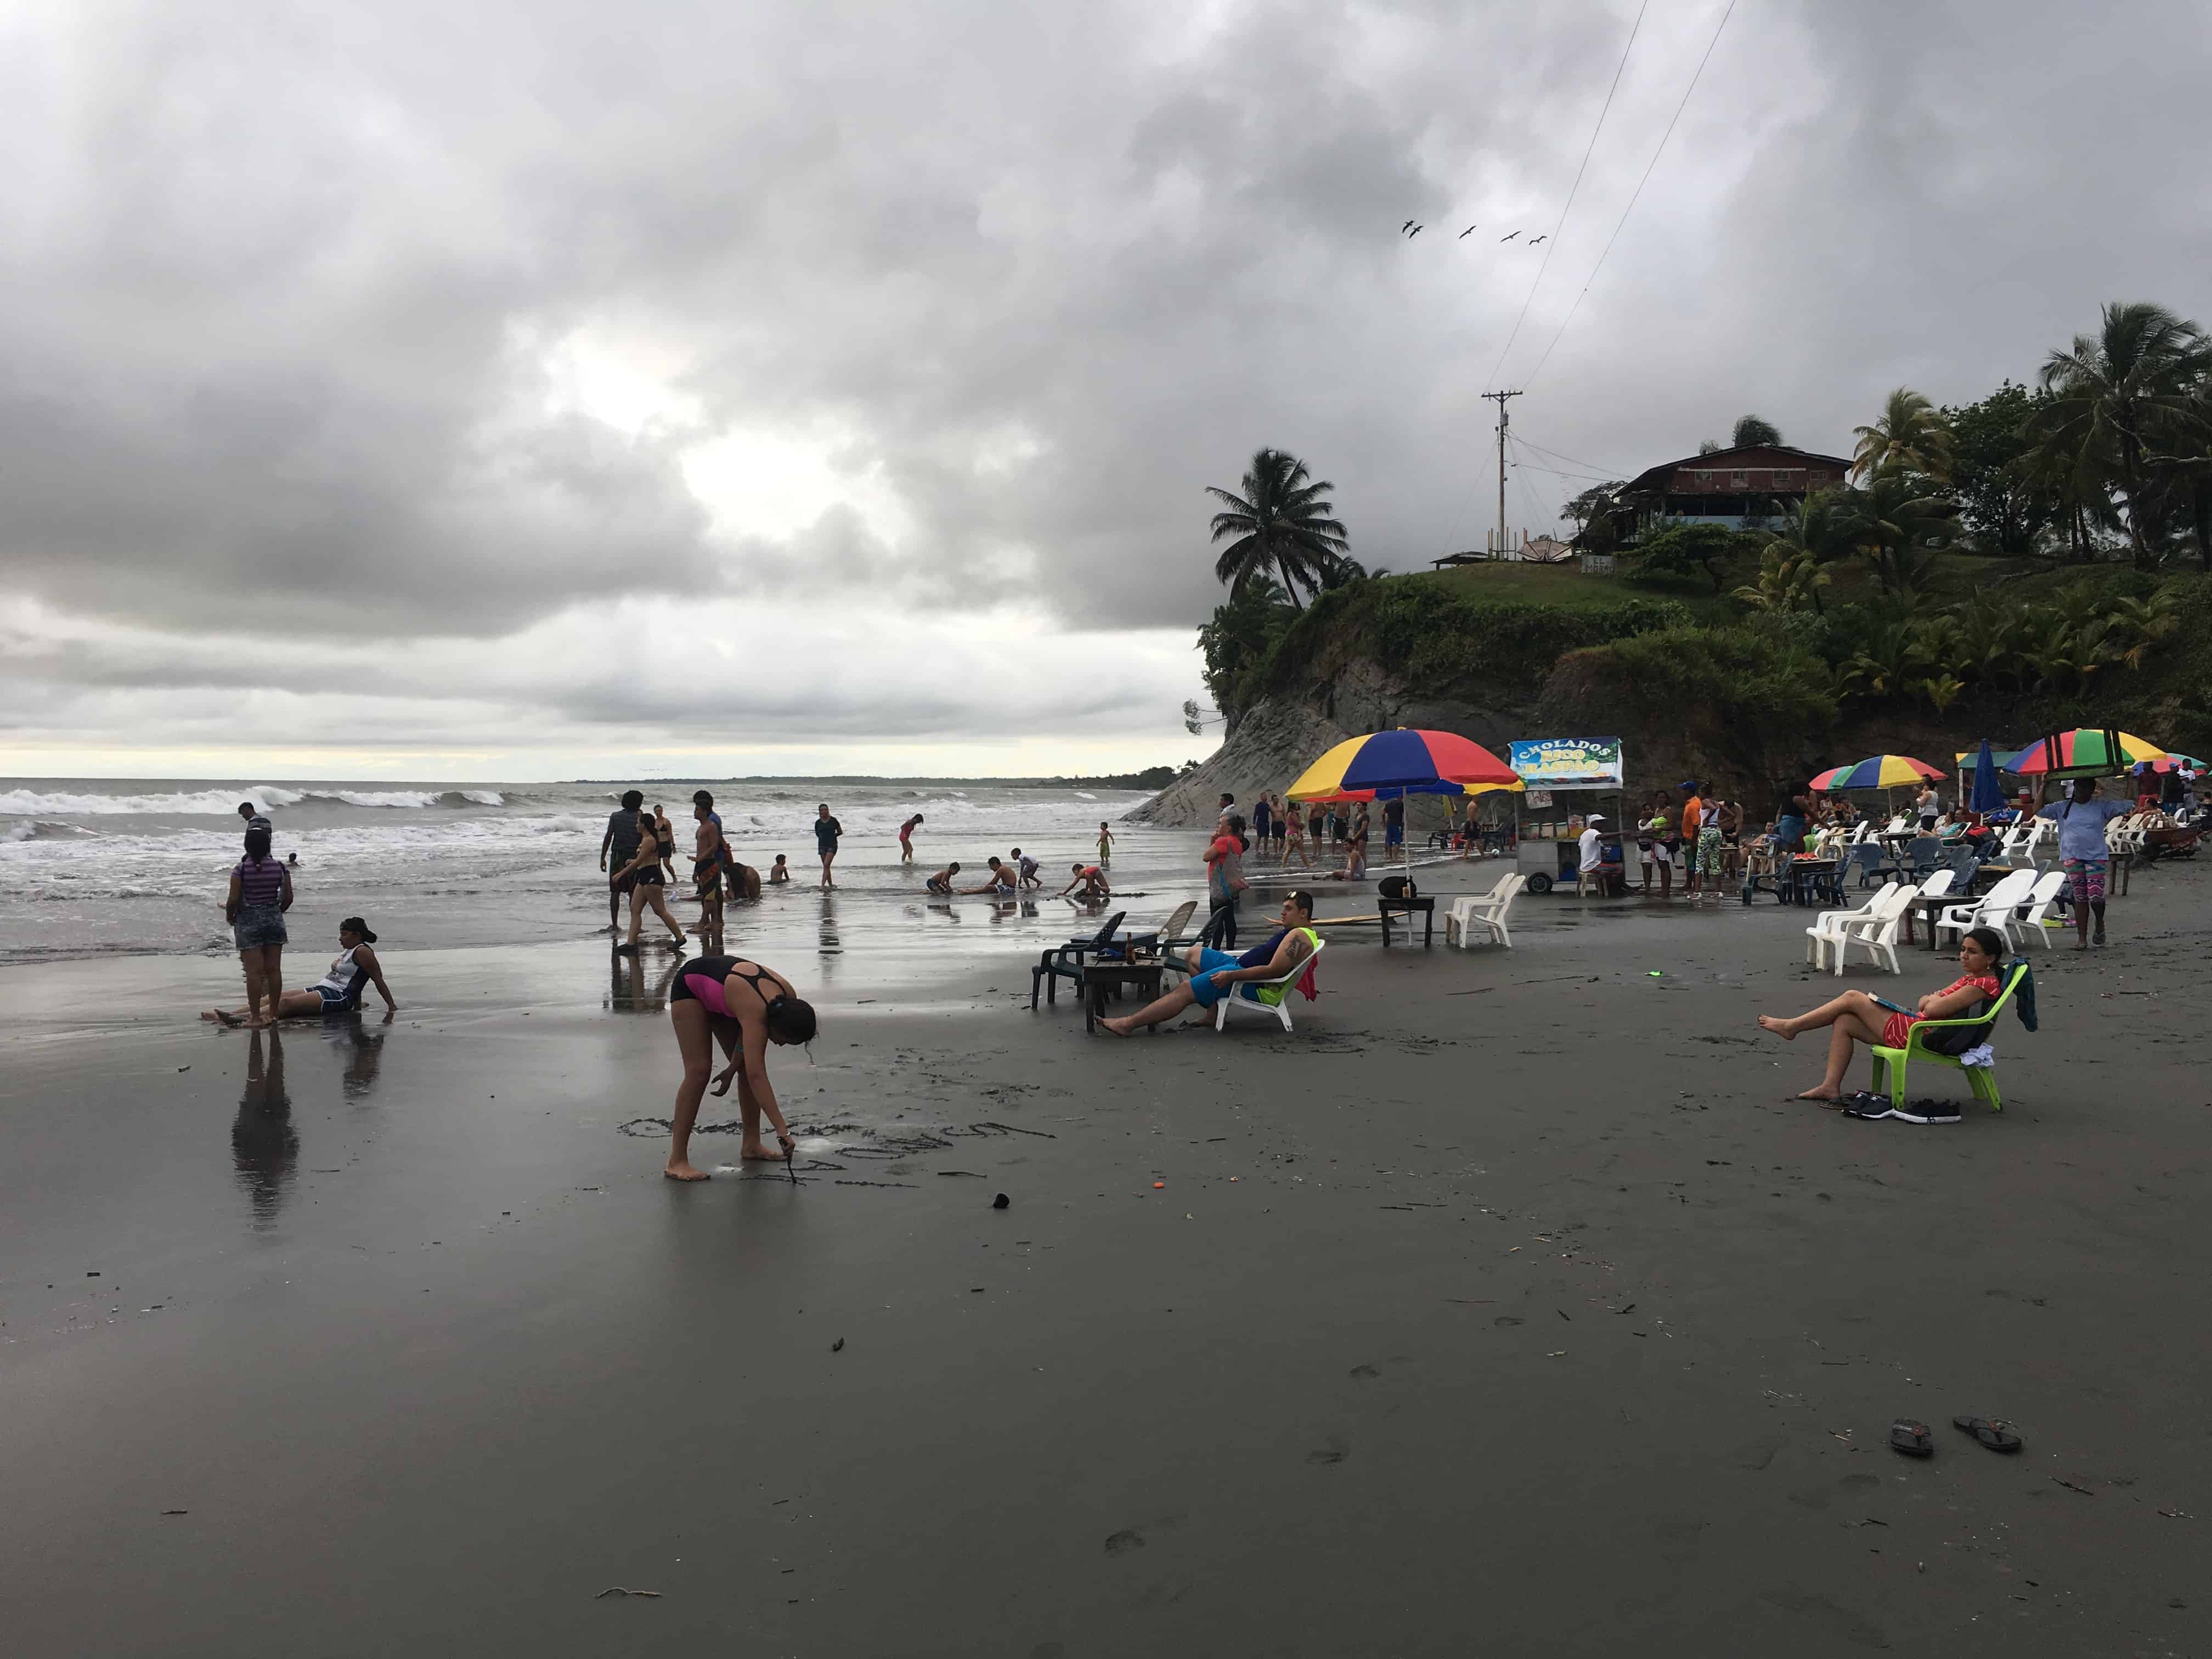 The beach in Ladrilleros, Valle del Cauca, Colombia